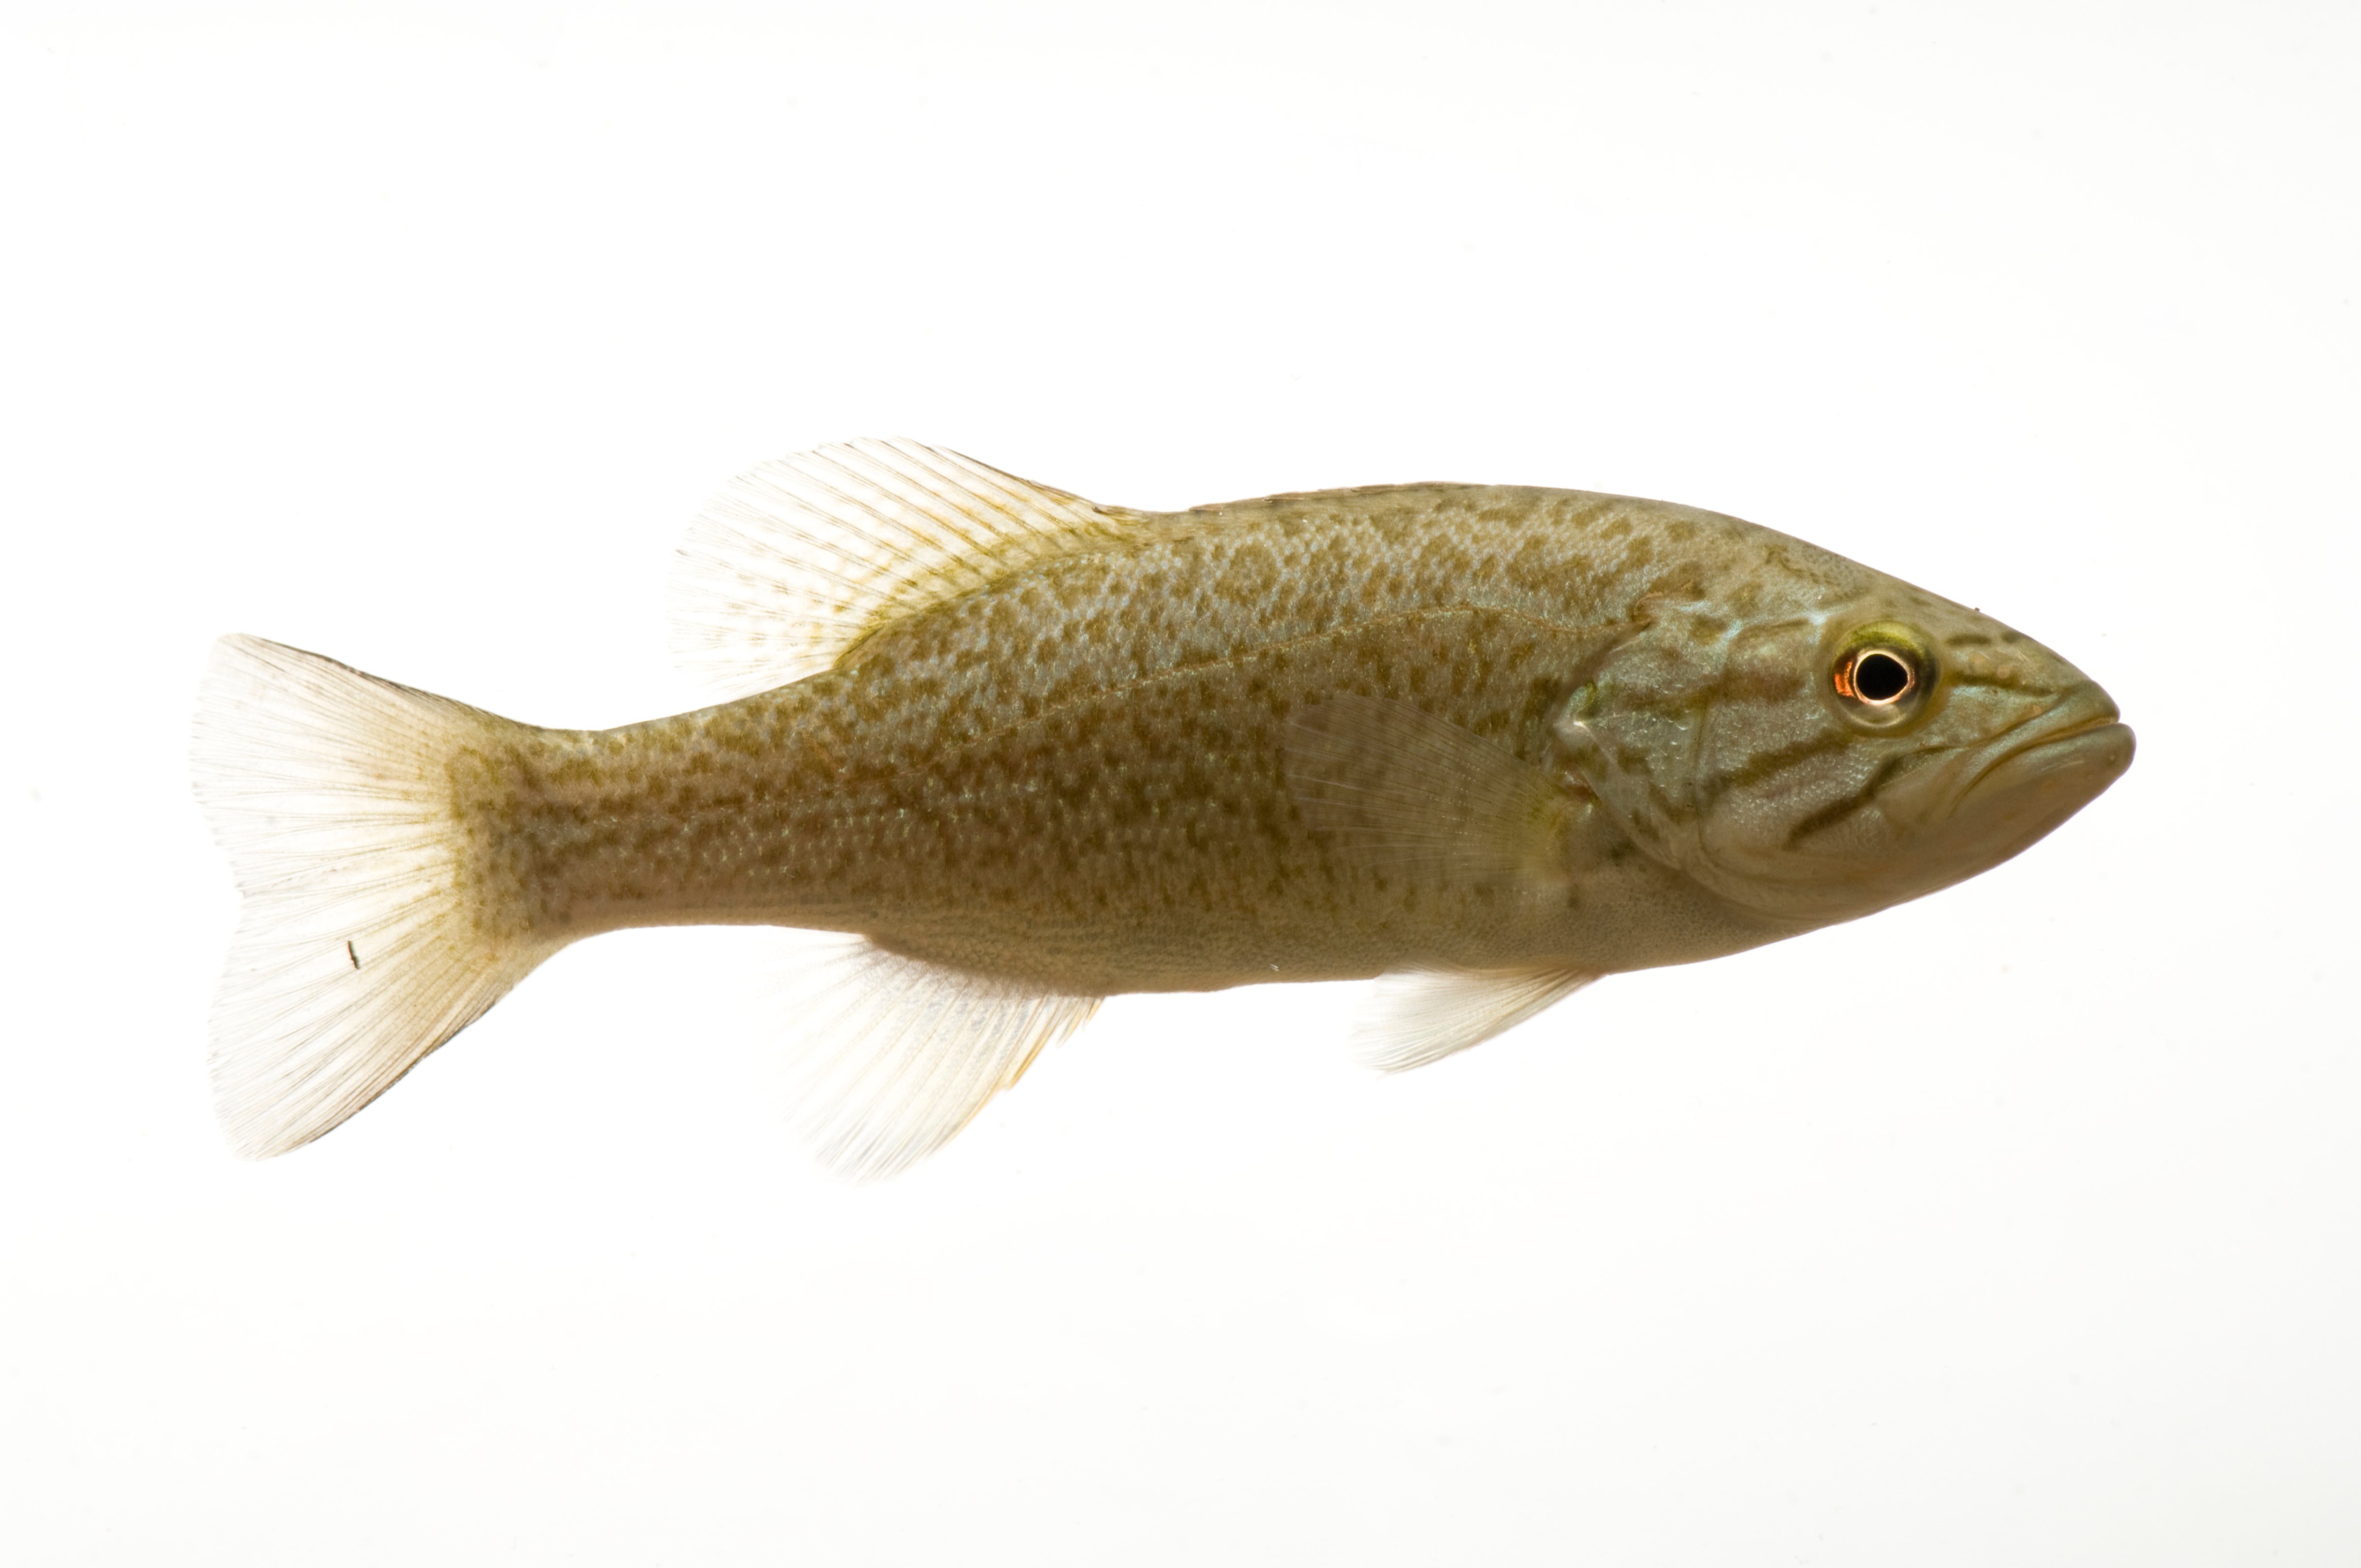 A smallmouth bass fish